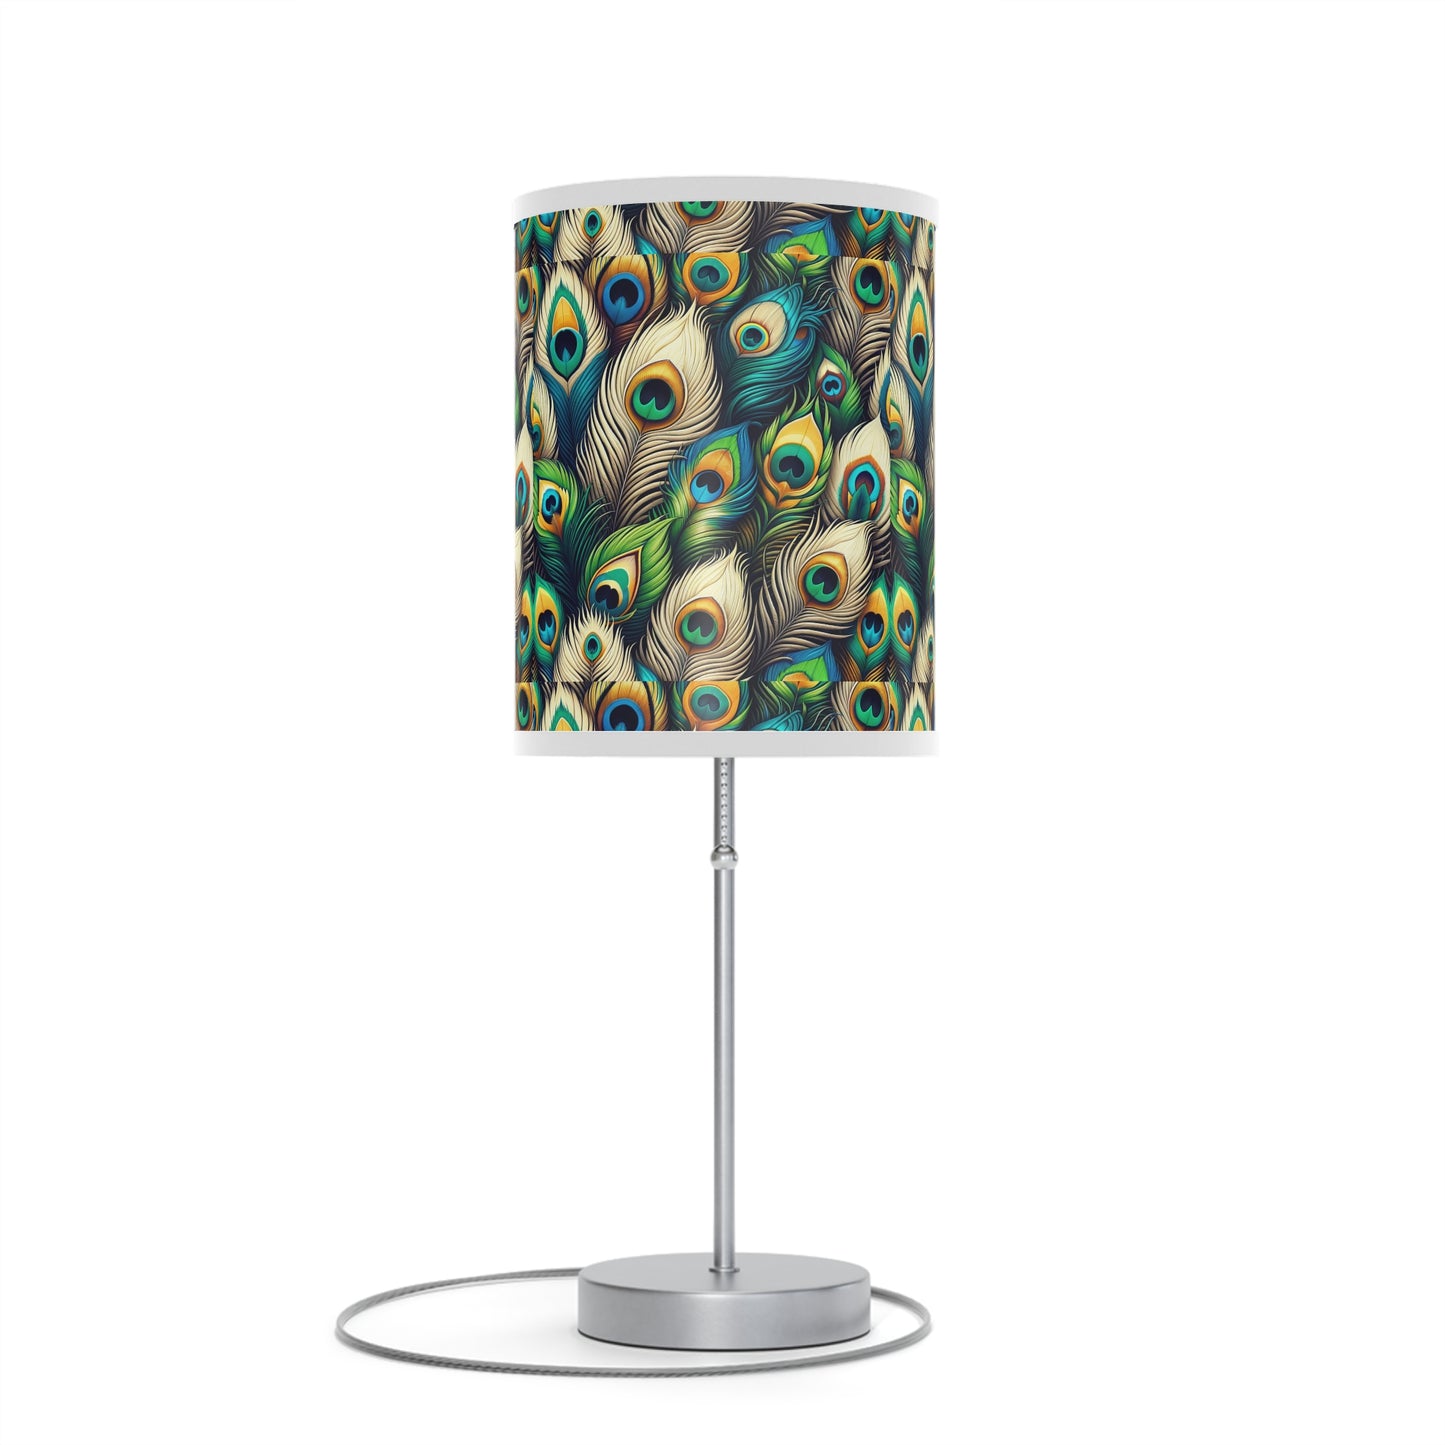 Plumage Elegance Table Lamp